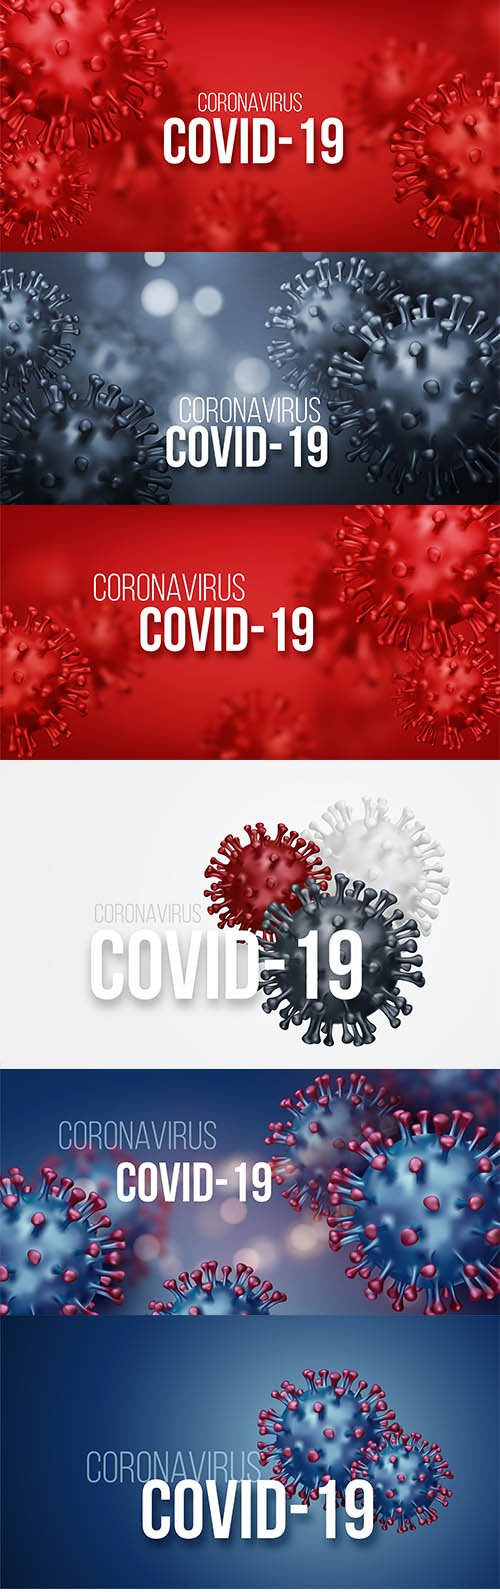 Coronavirus Backgrounds